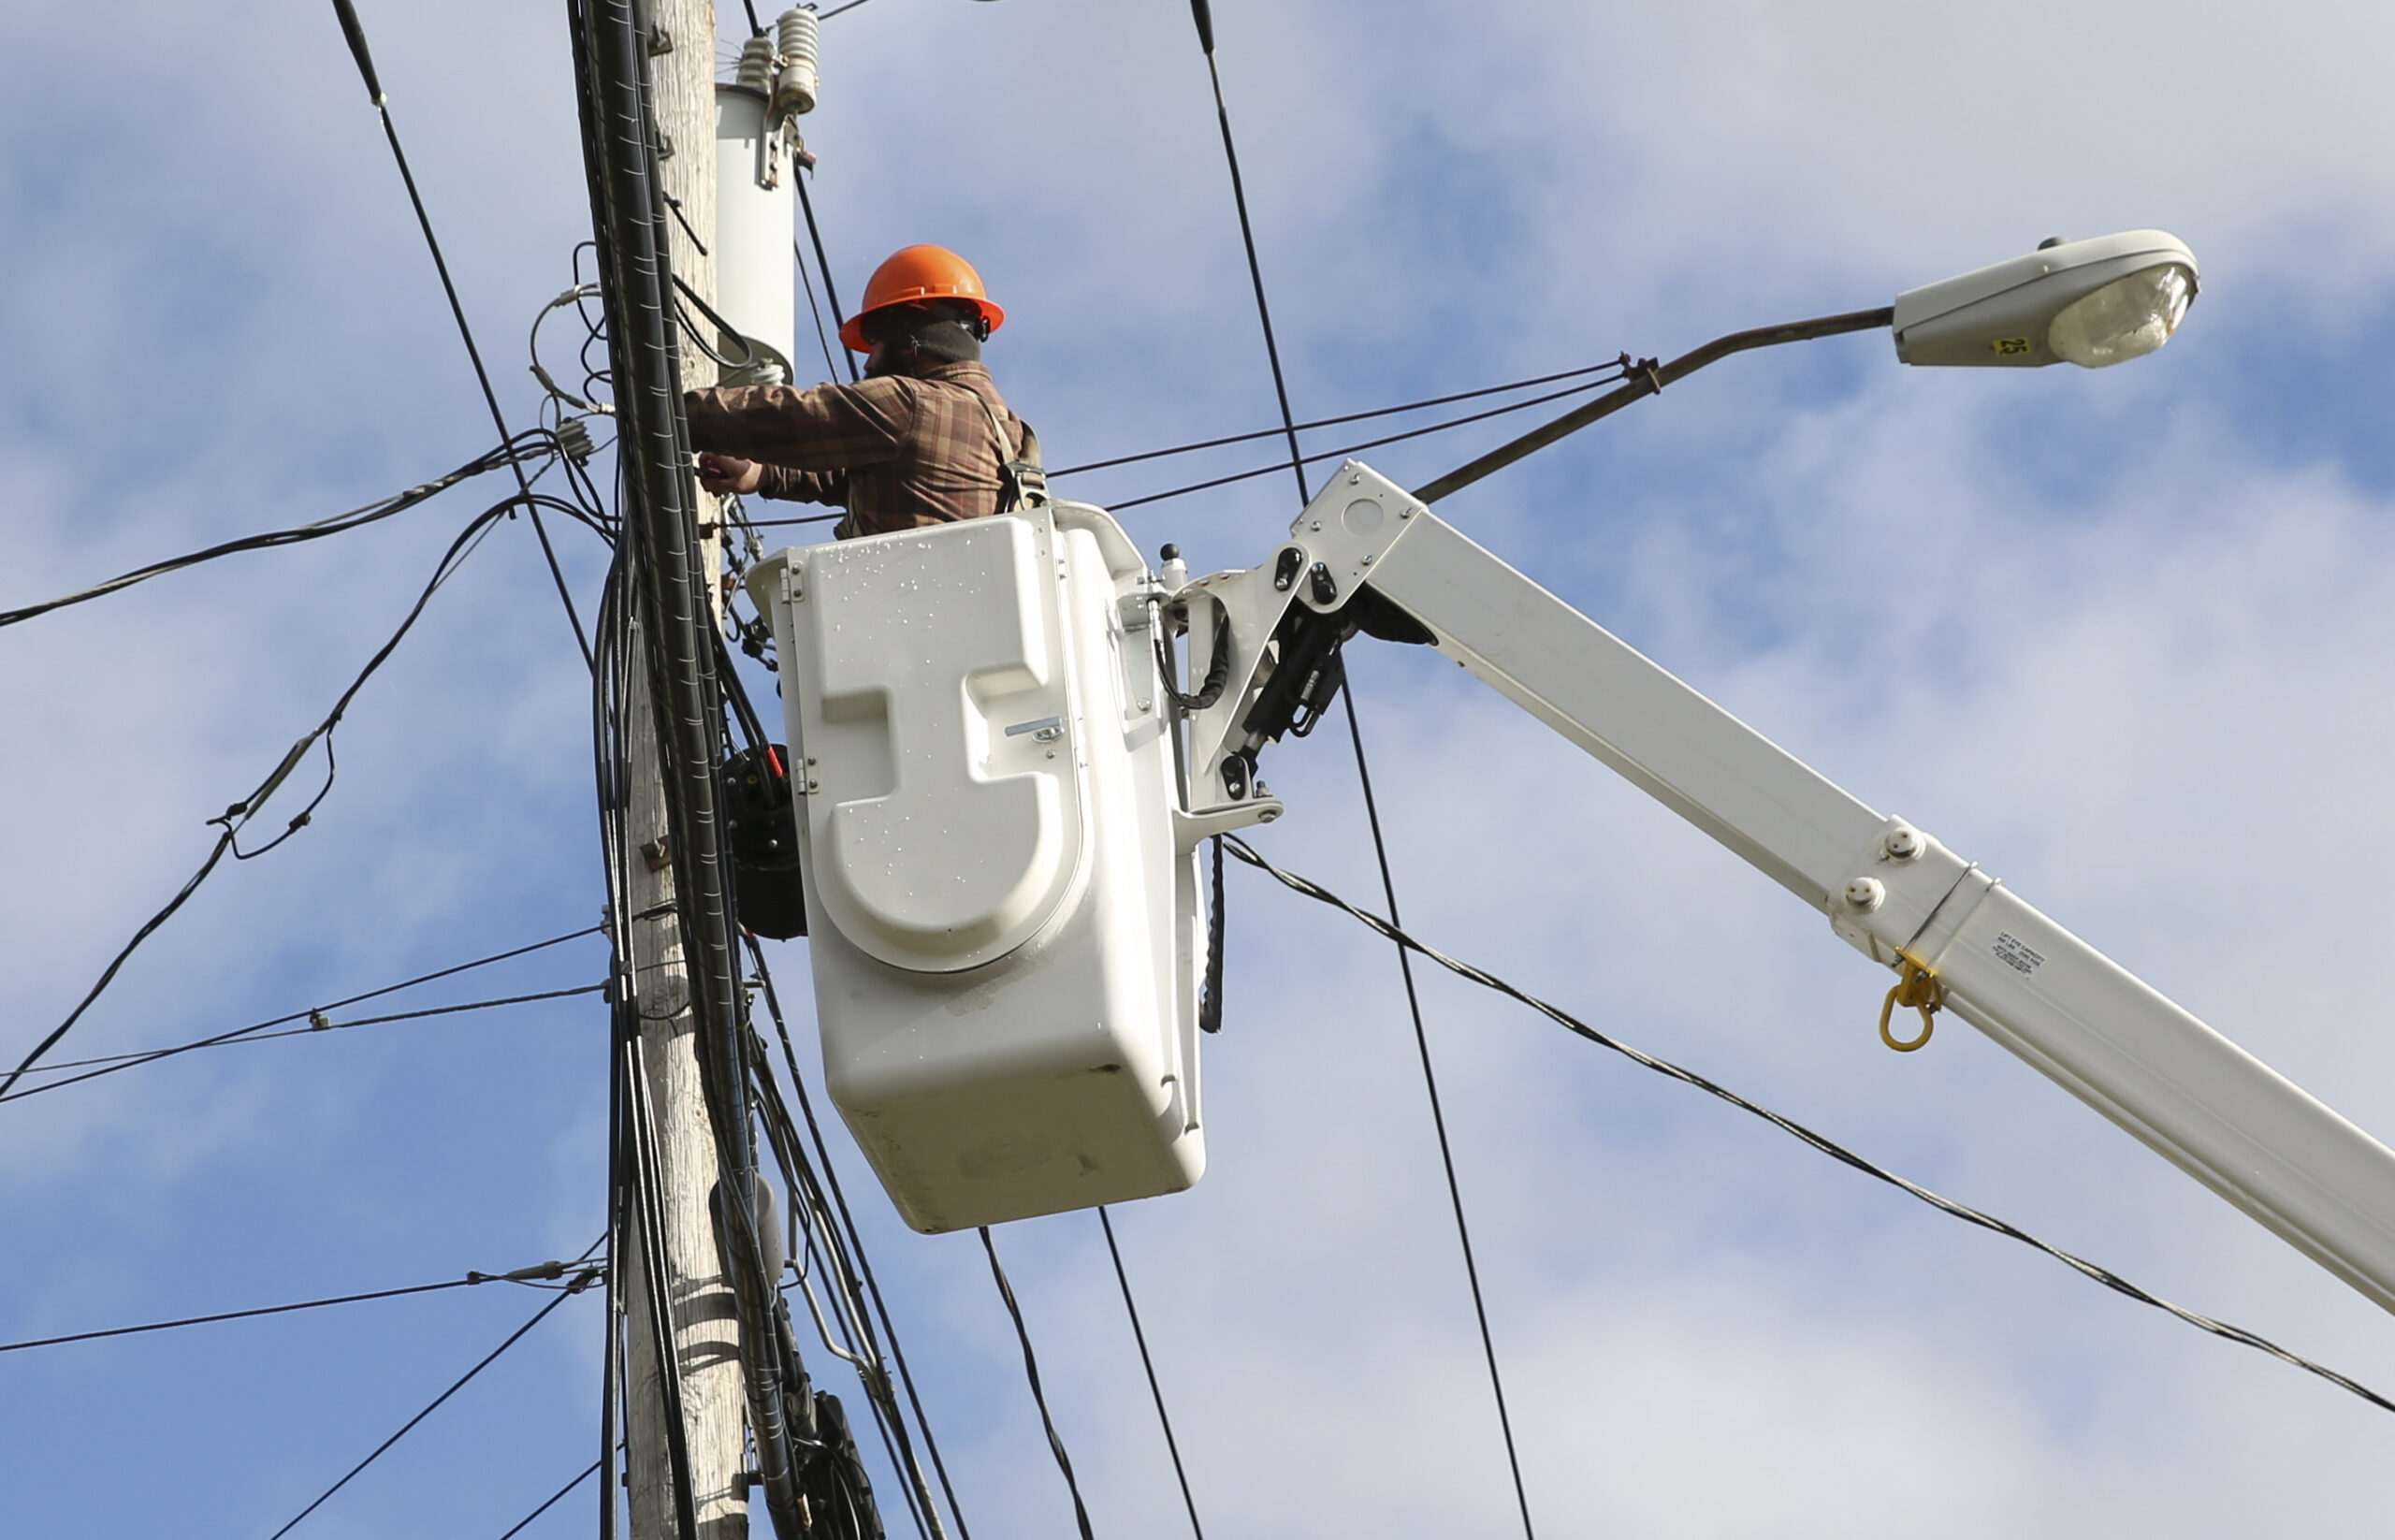 A telecommunications crew member helps extend broadband service.